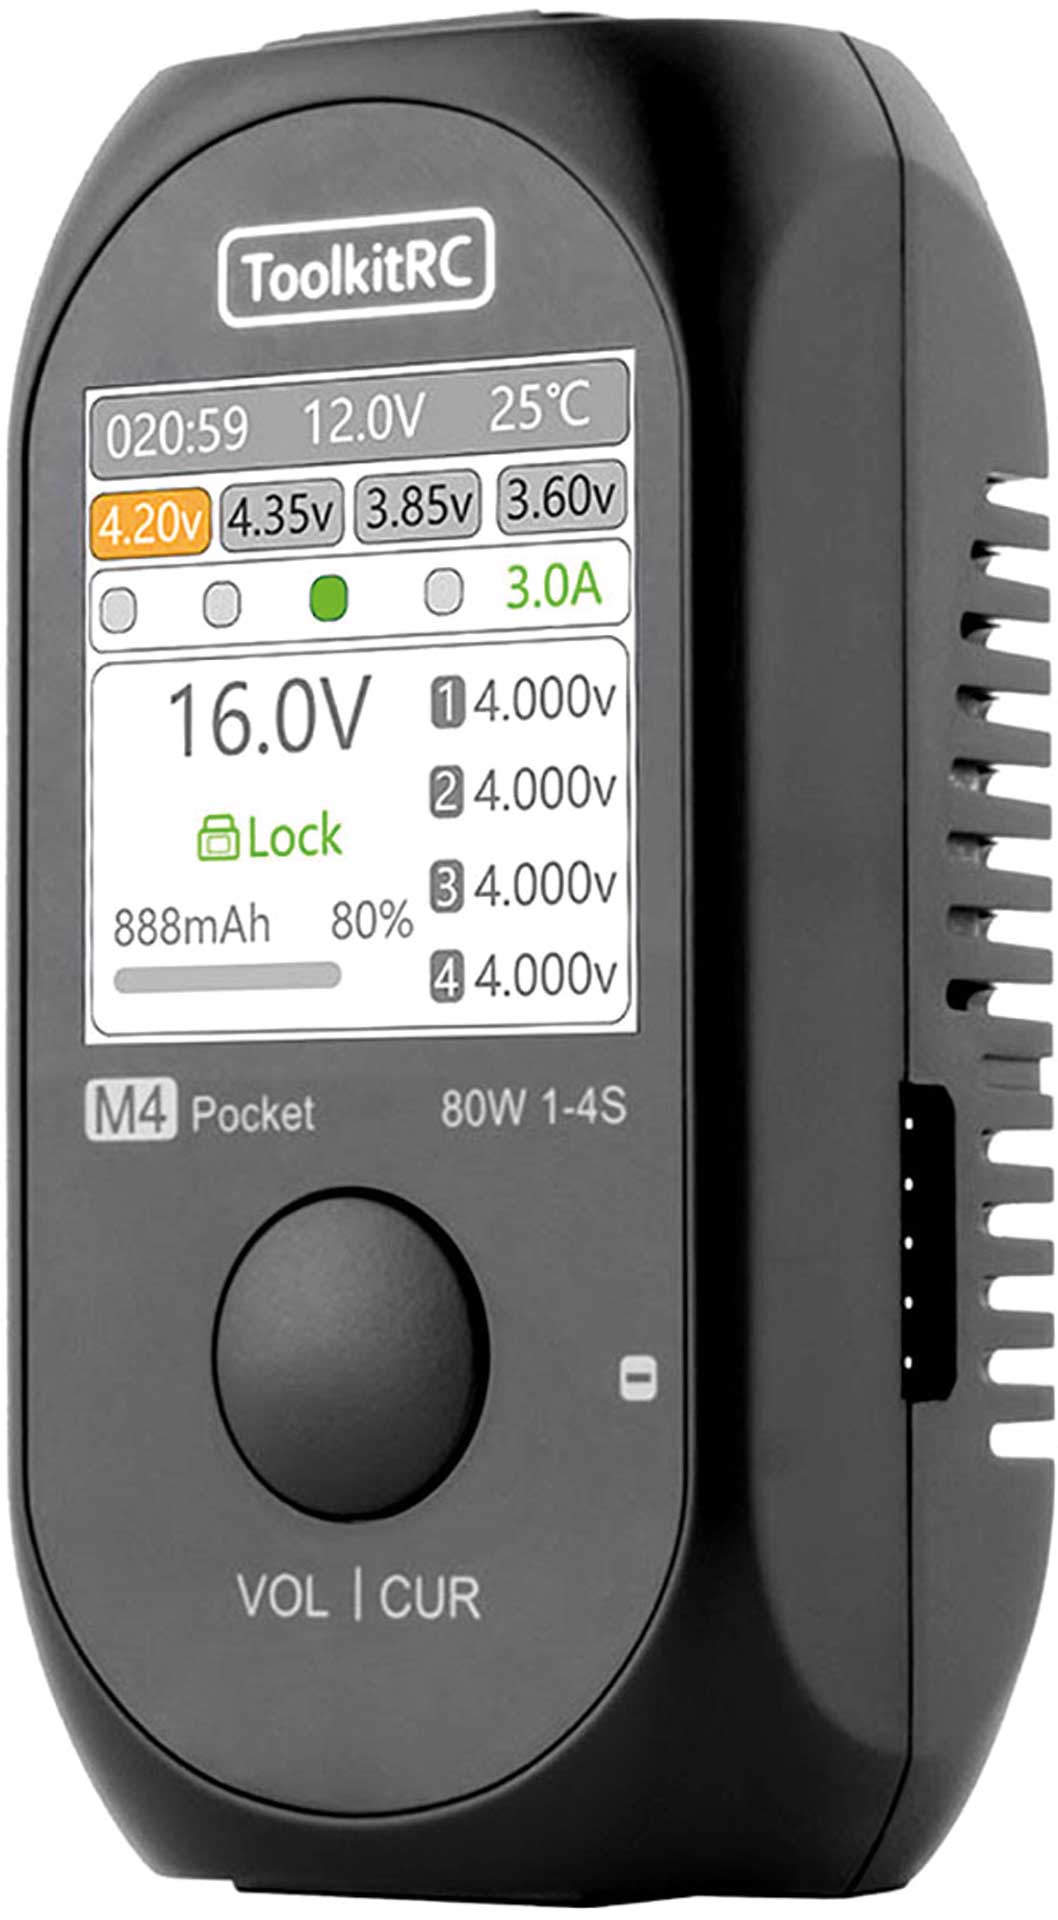 ToolkitRC M4 Pocket LiPo 1-4S 5A Chargeur DC 7-25V USB-C